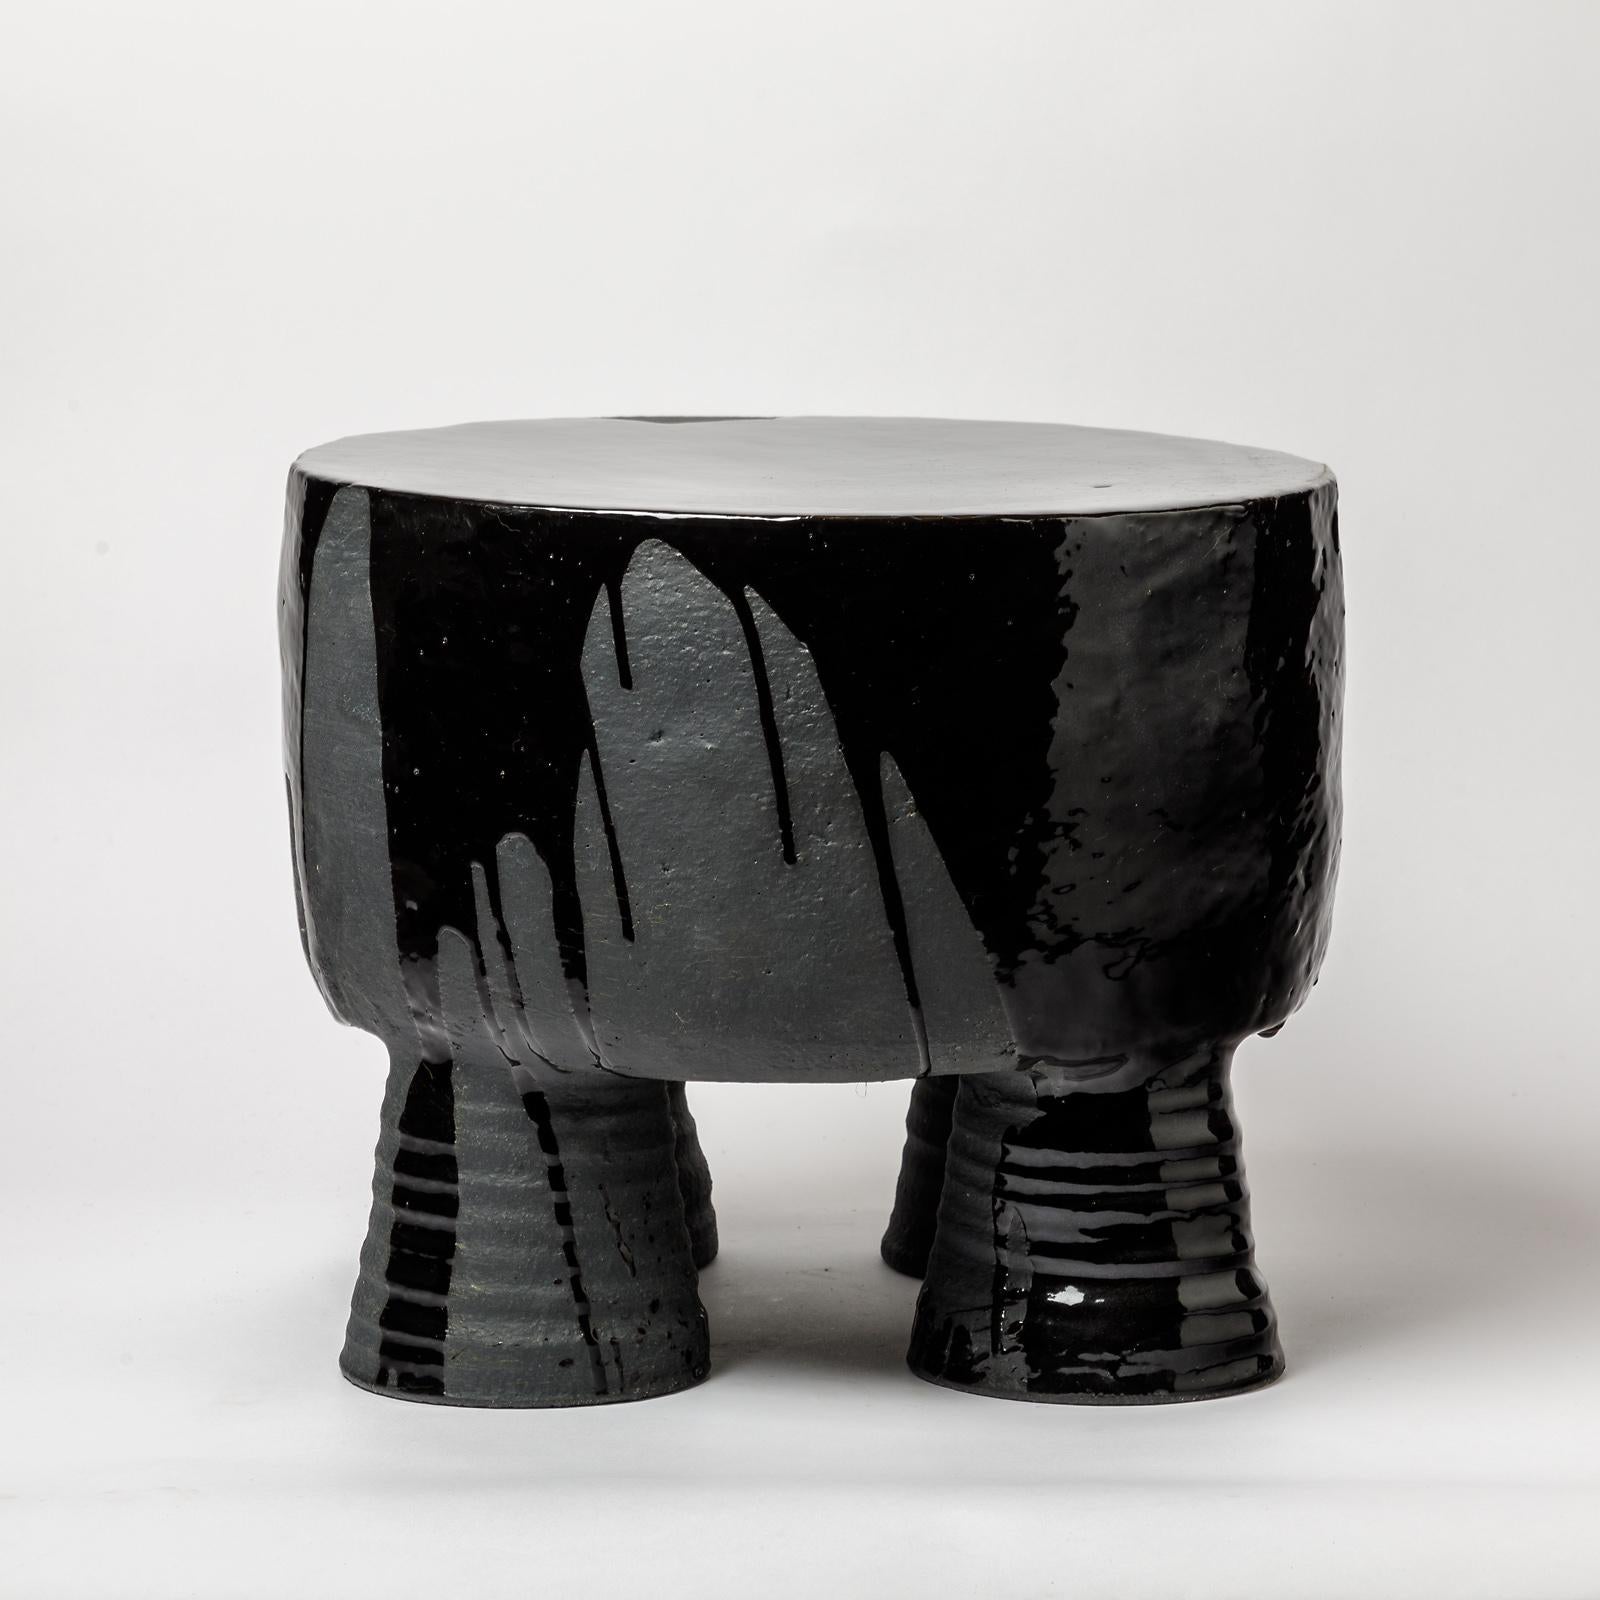 A ceramic stool with black glazes decoration by Mia Jensen.
Unique piece.
Signed under the base.
Circa 2021.